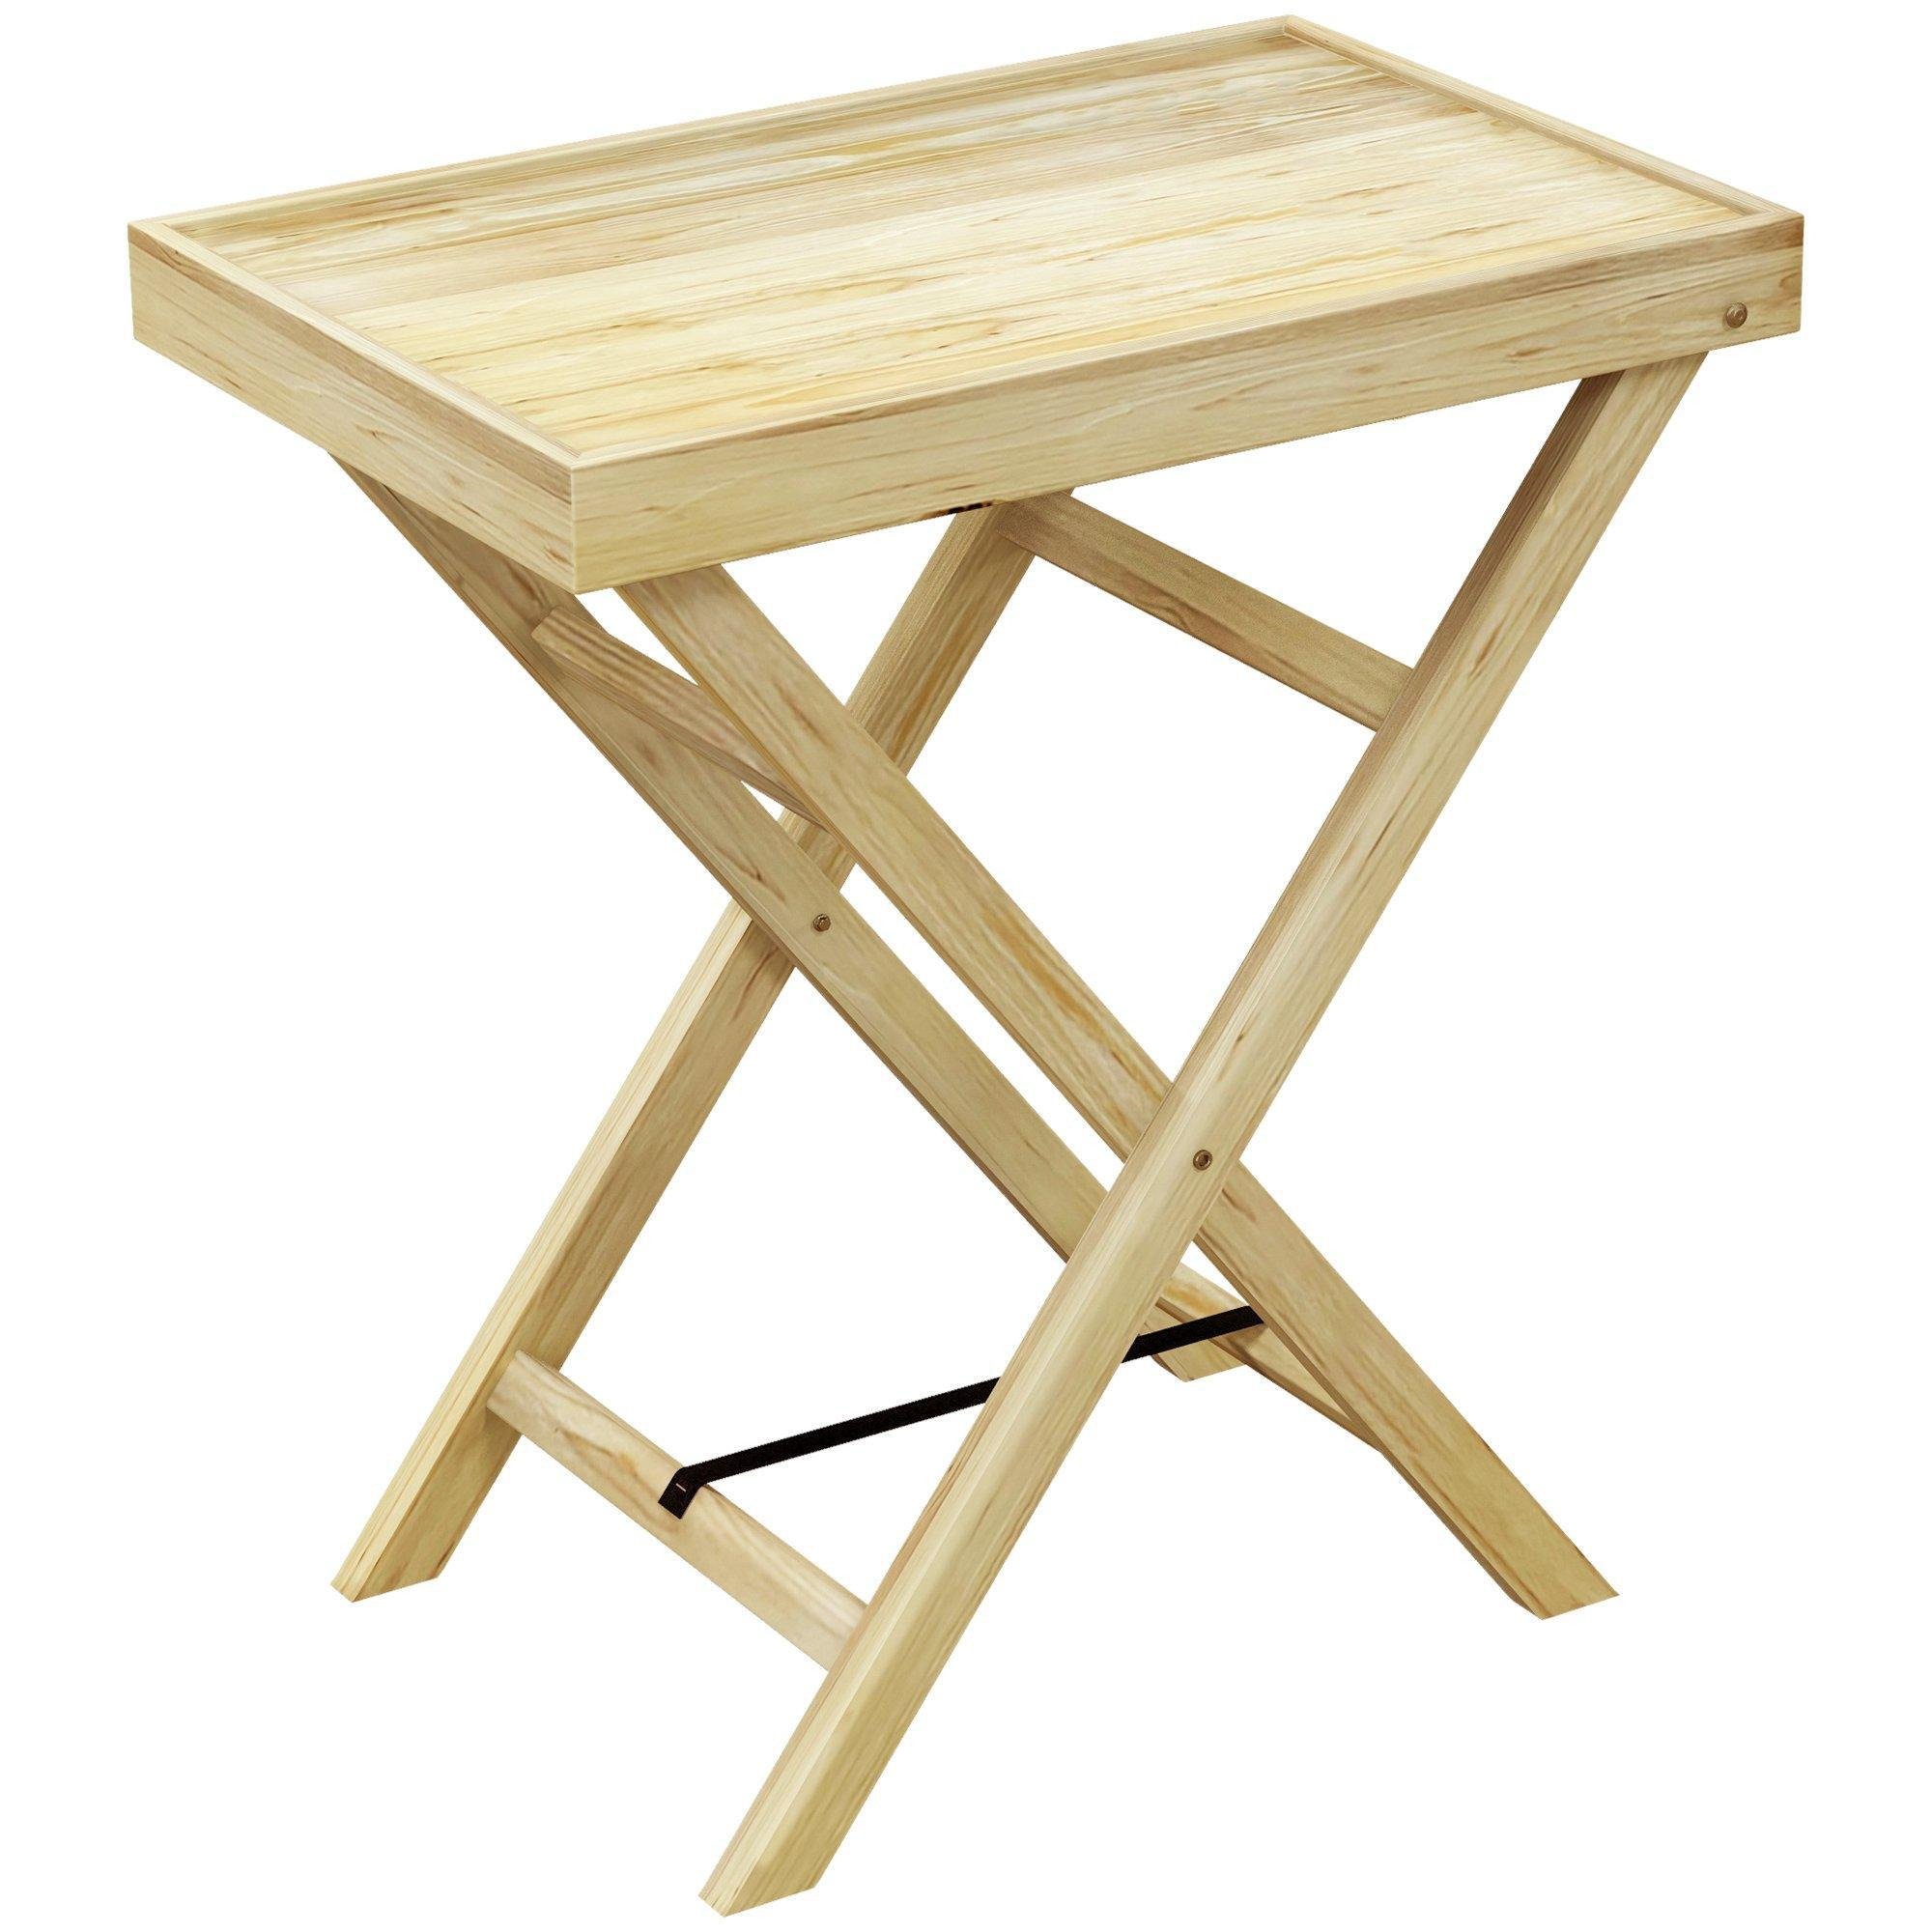 Wooden Garden Table, Outdoor Side Table 68cmx44cmx75cm - image 1